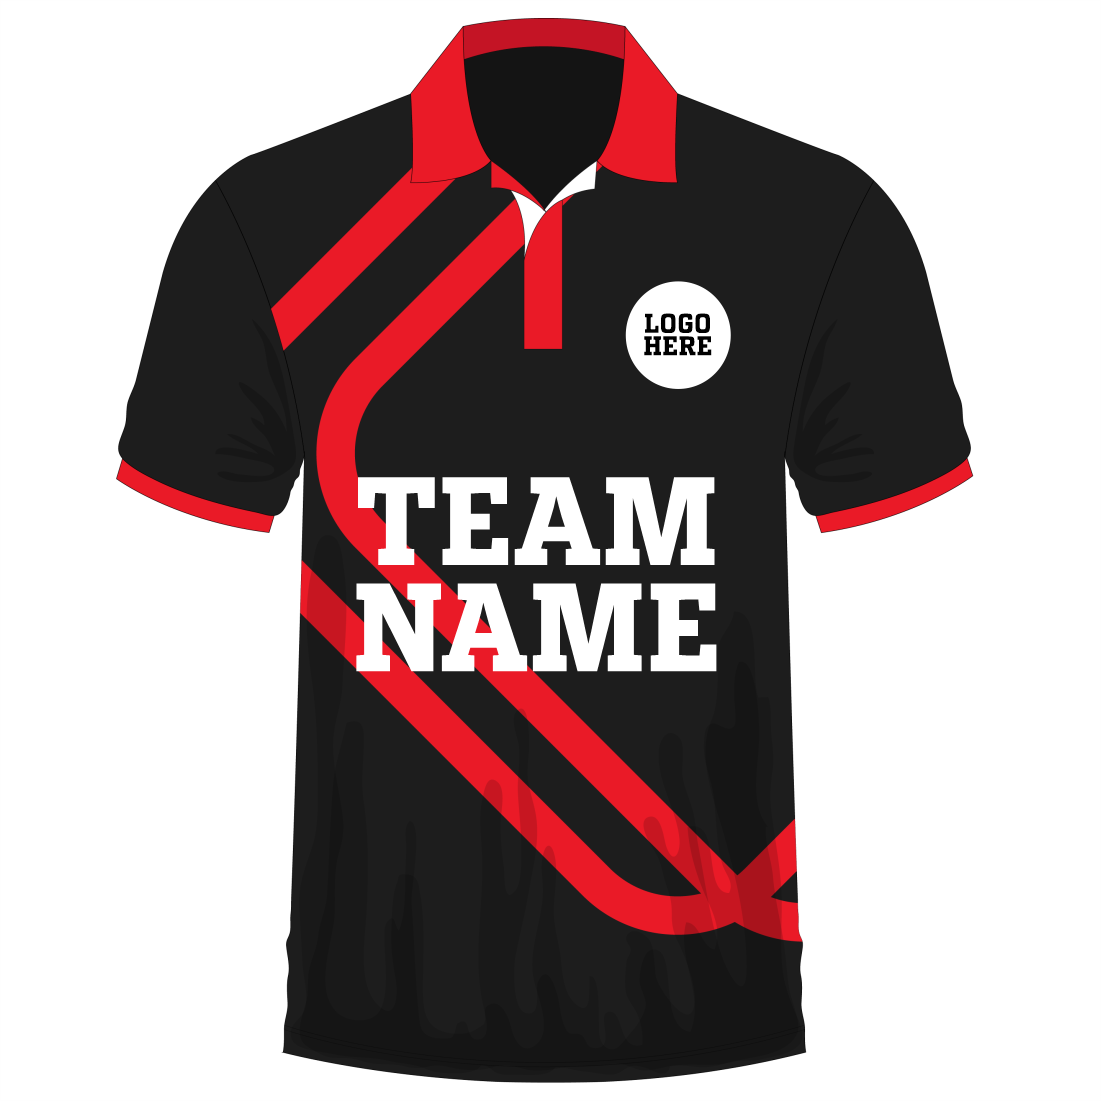 NEXT PRINT Mens Cricket Jersey Half Sleeve Name Team Name Number